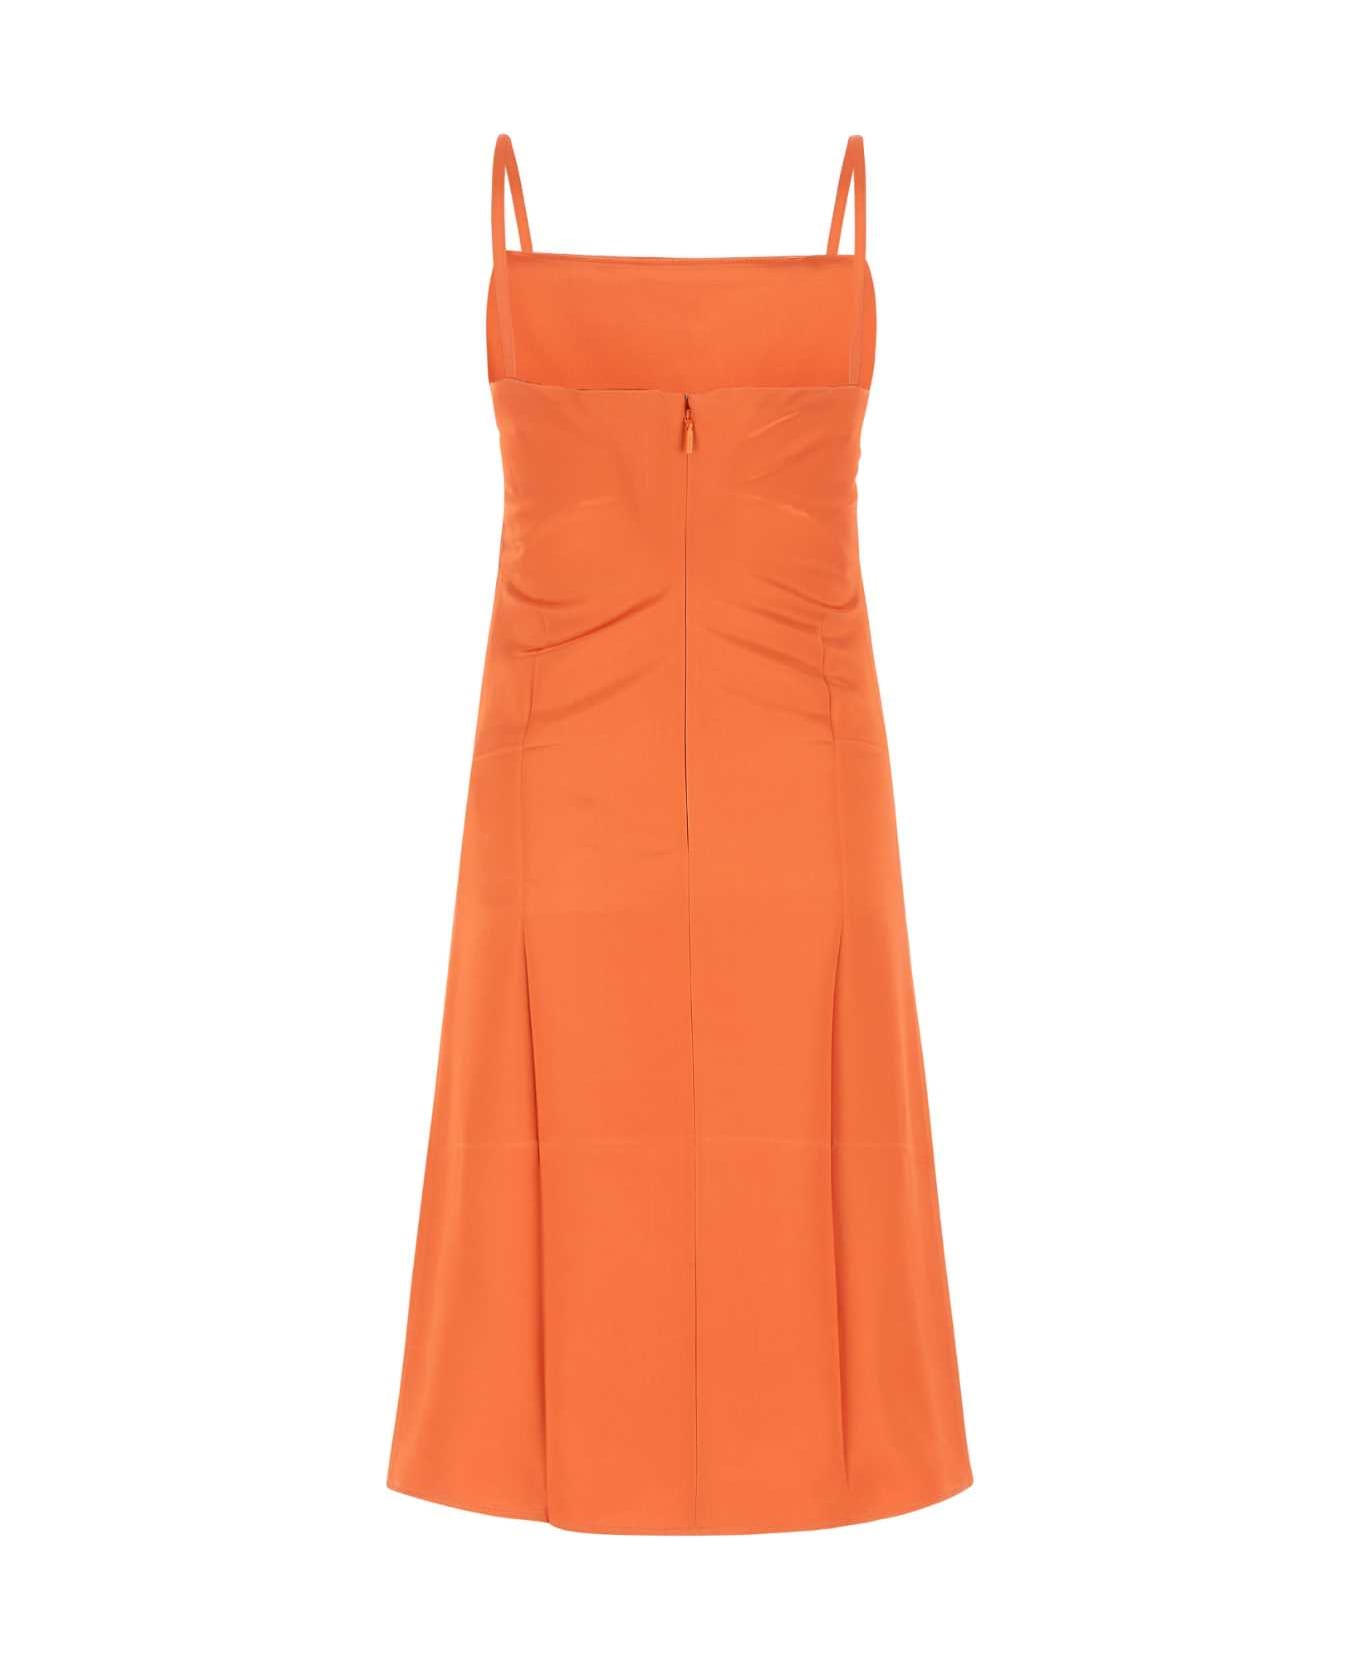 Loewe Orange Satin Dress - BRIGHTORANGE